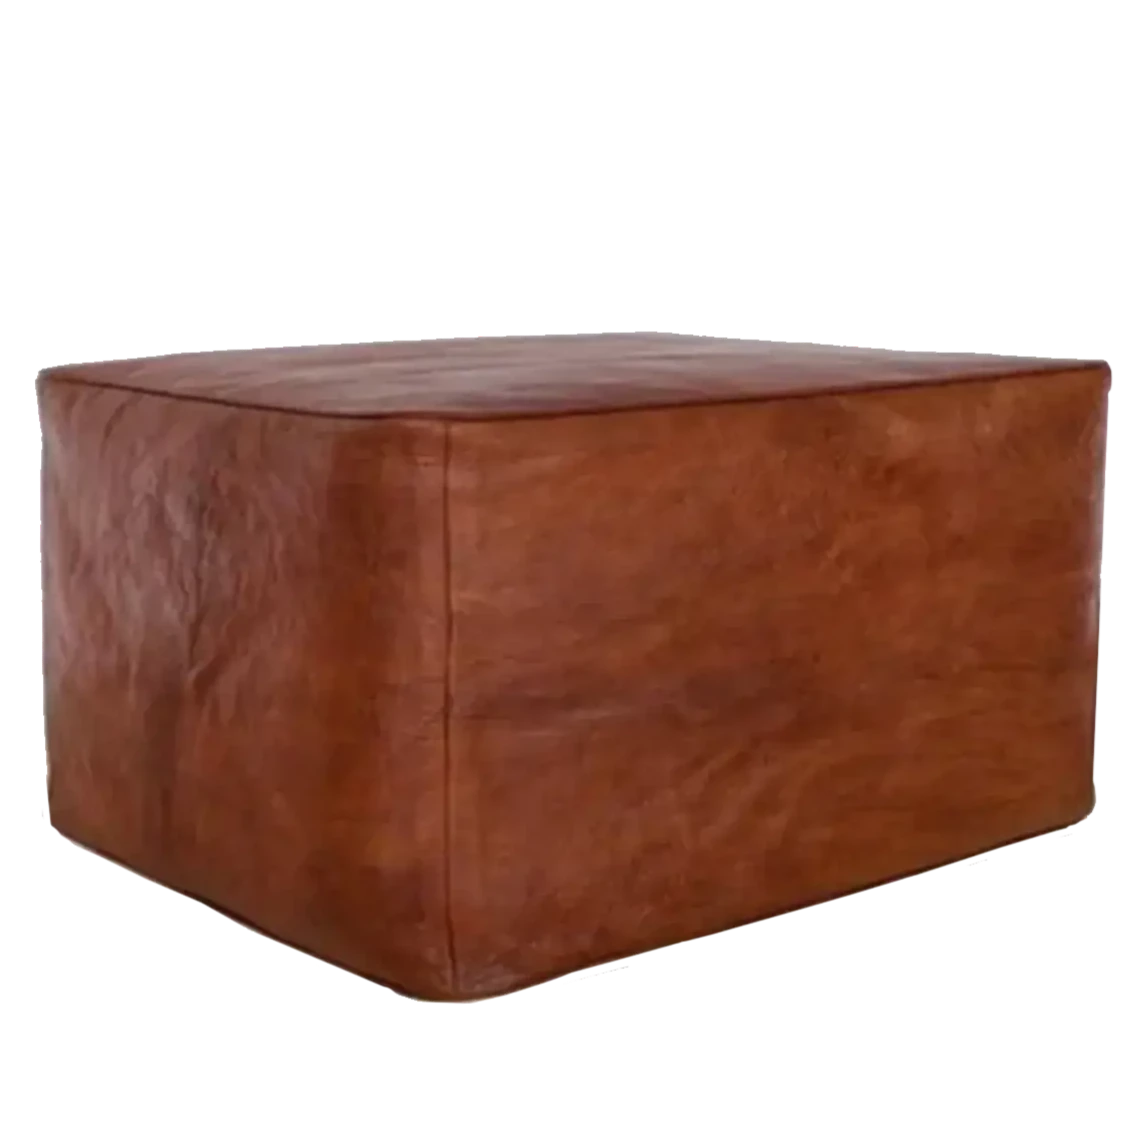 Dounia home pouf  made of Leather, Model: IDRA